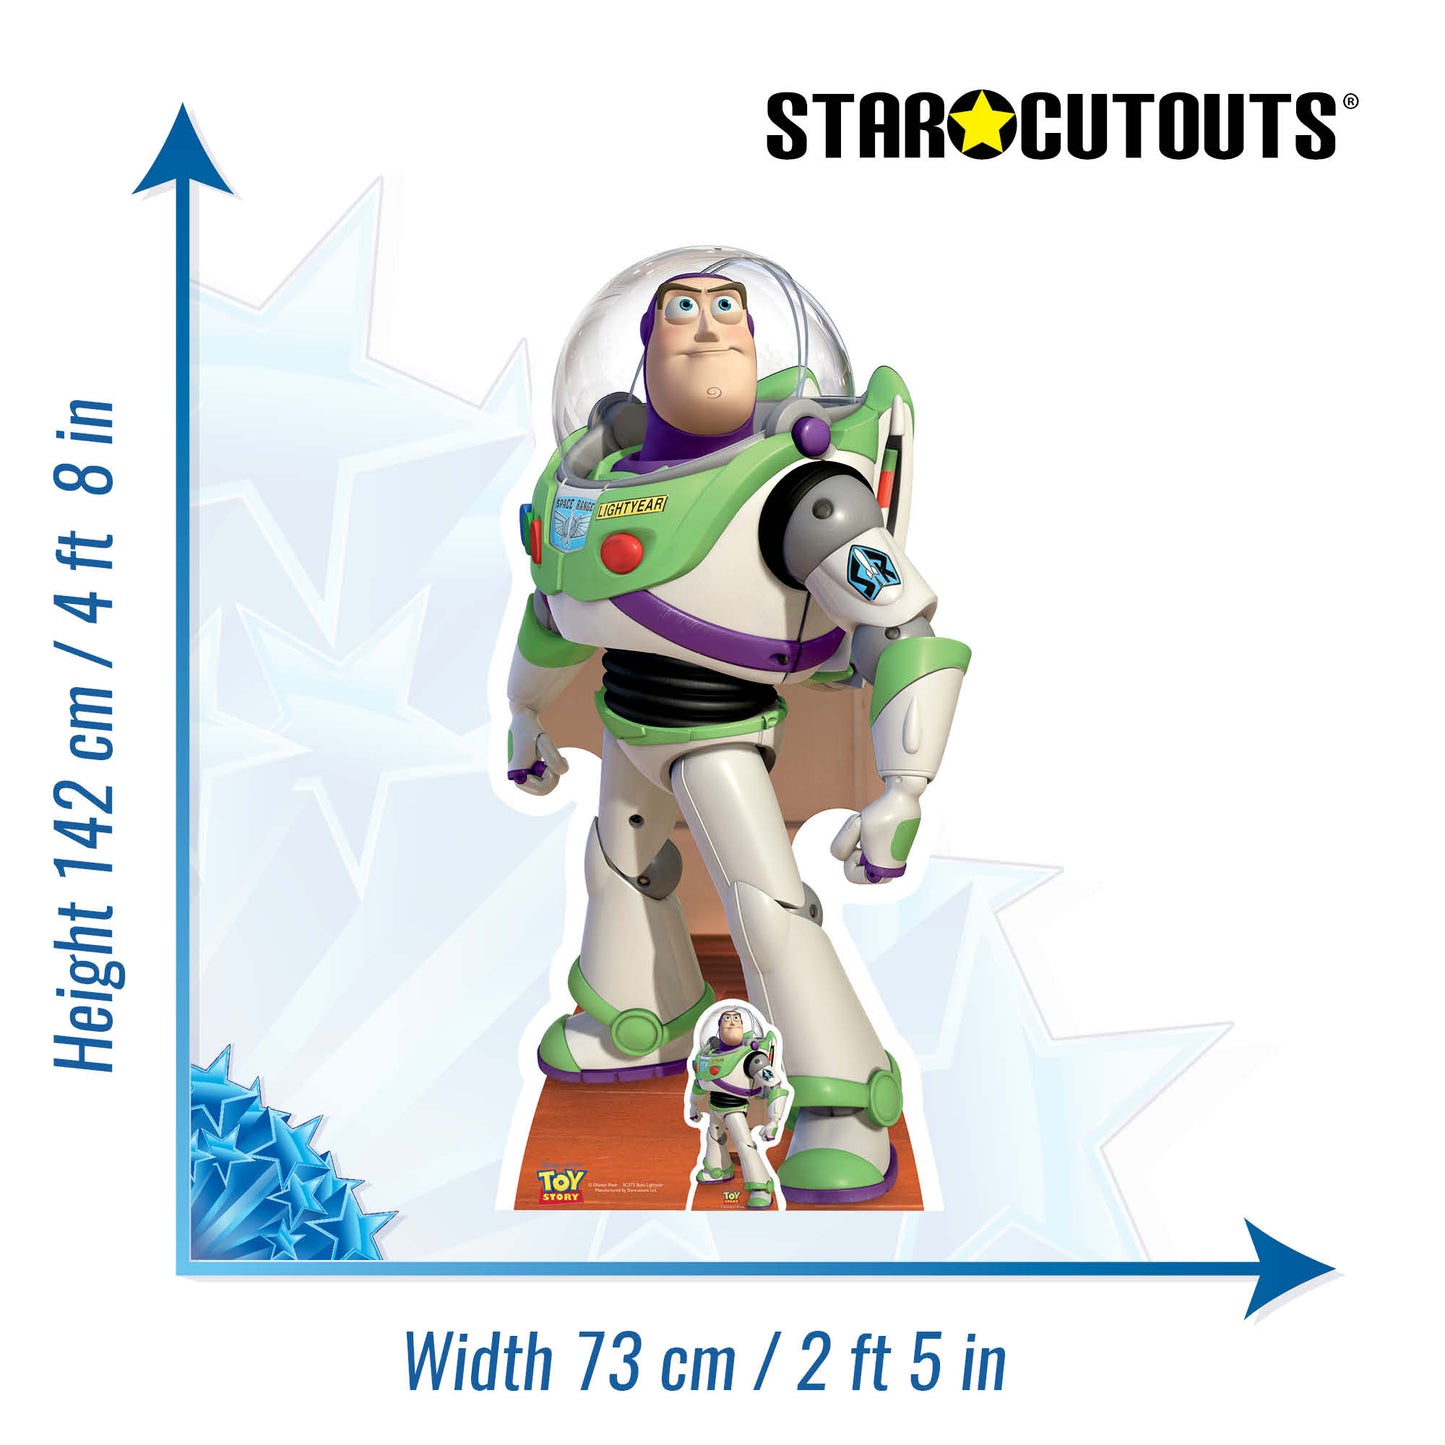 Buzz Lightyear Toy Story Cardboard Cutout